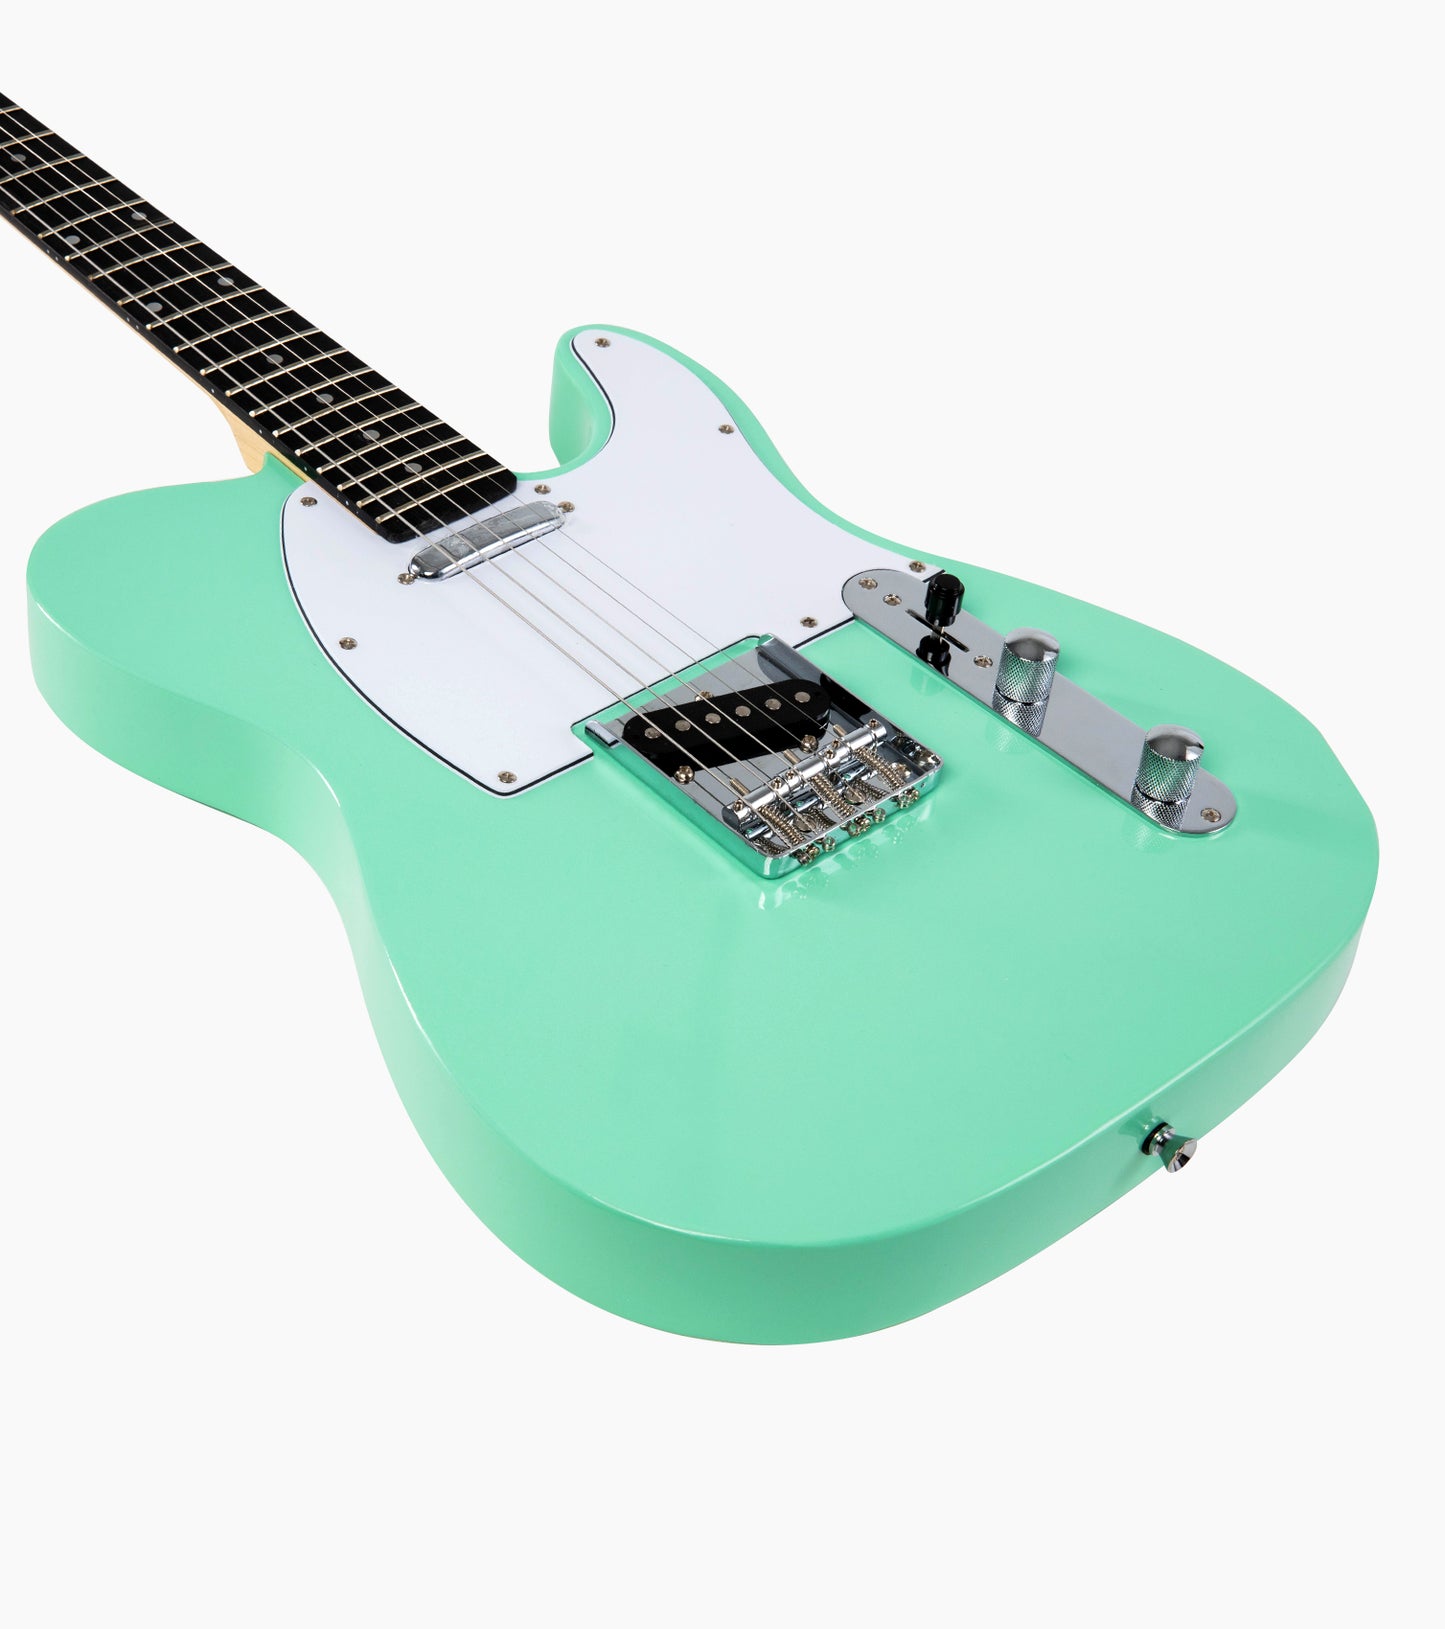 close-up of a Green single-cutaway electric guitar